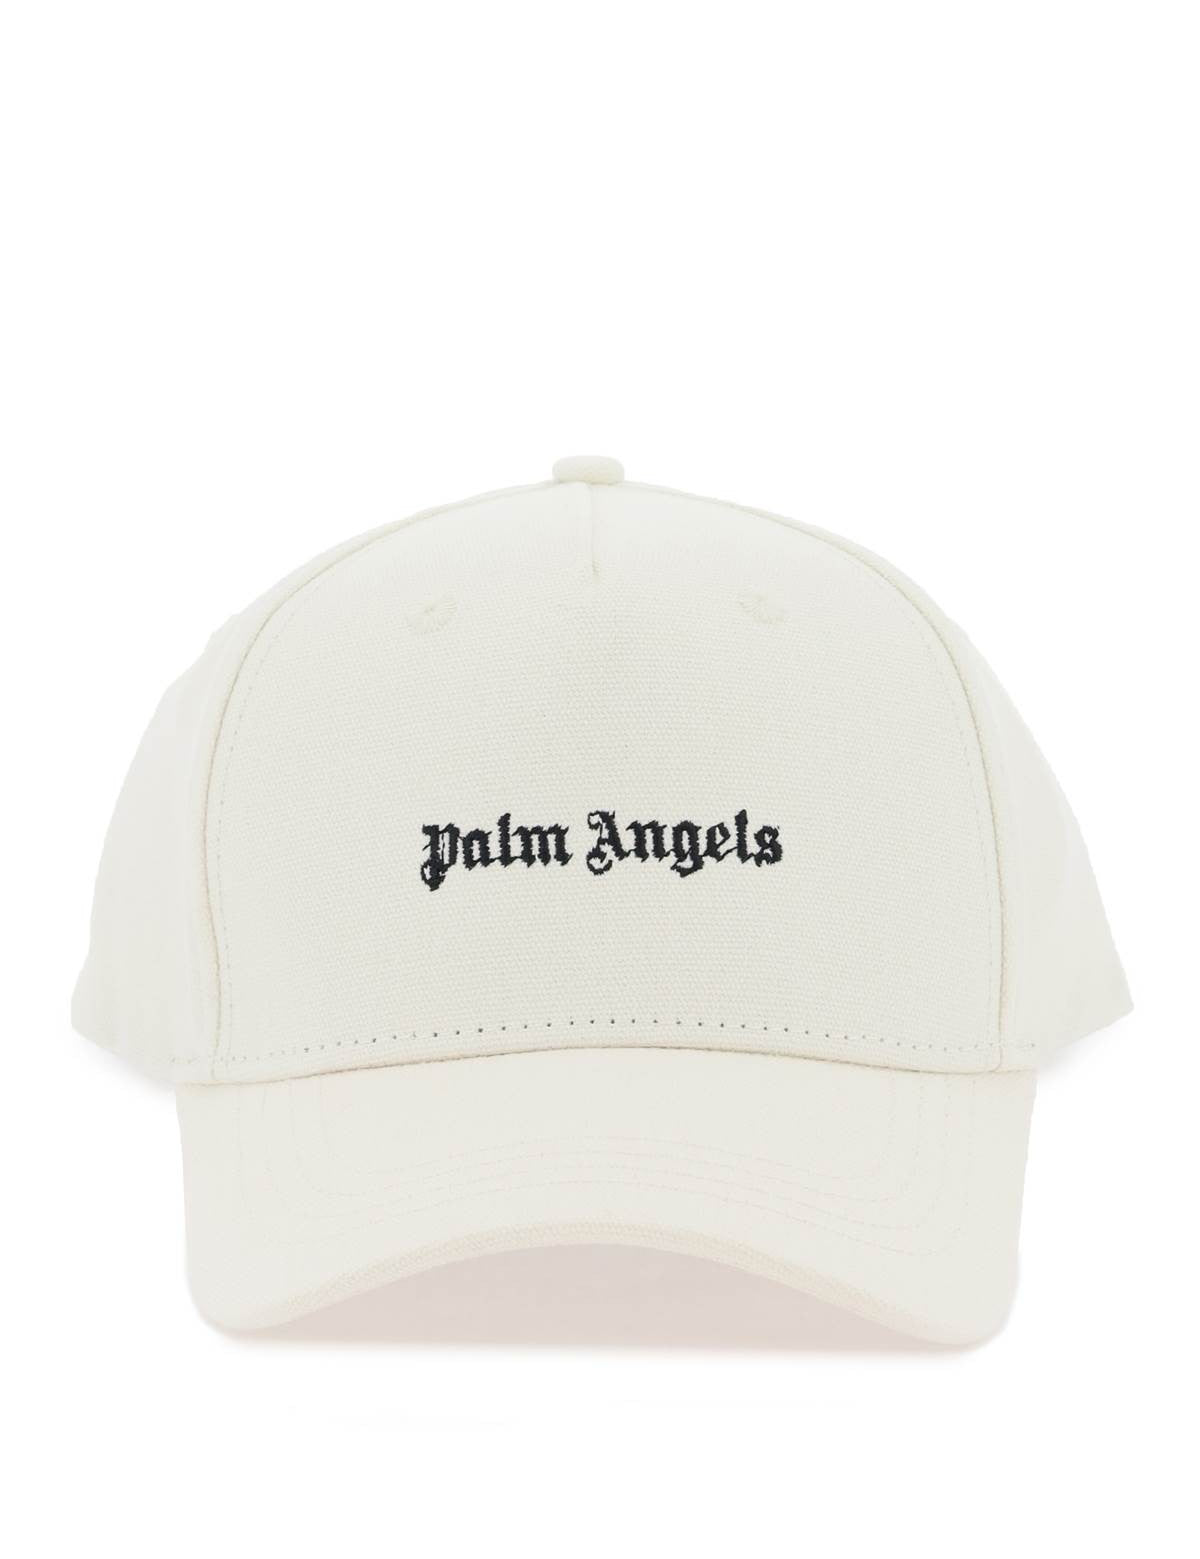 palm-angels-embroidered-baseball-cap.jpg